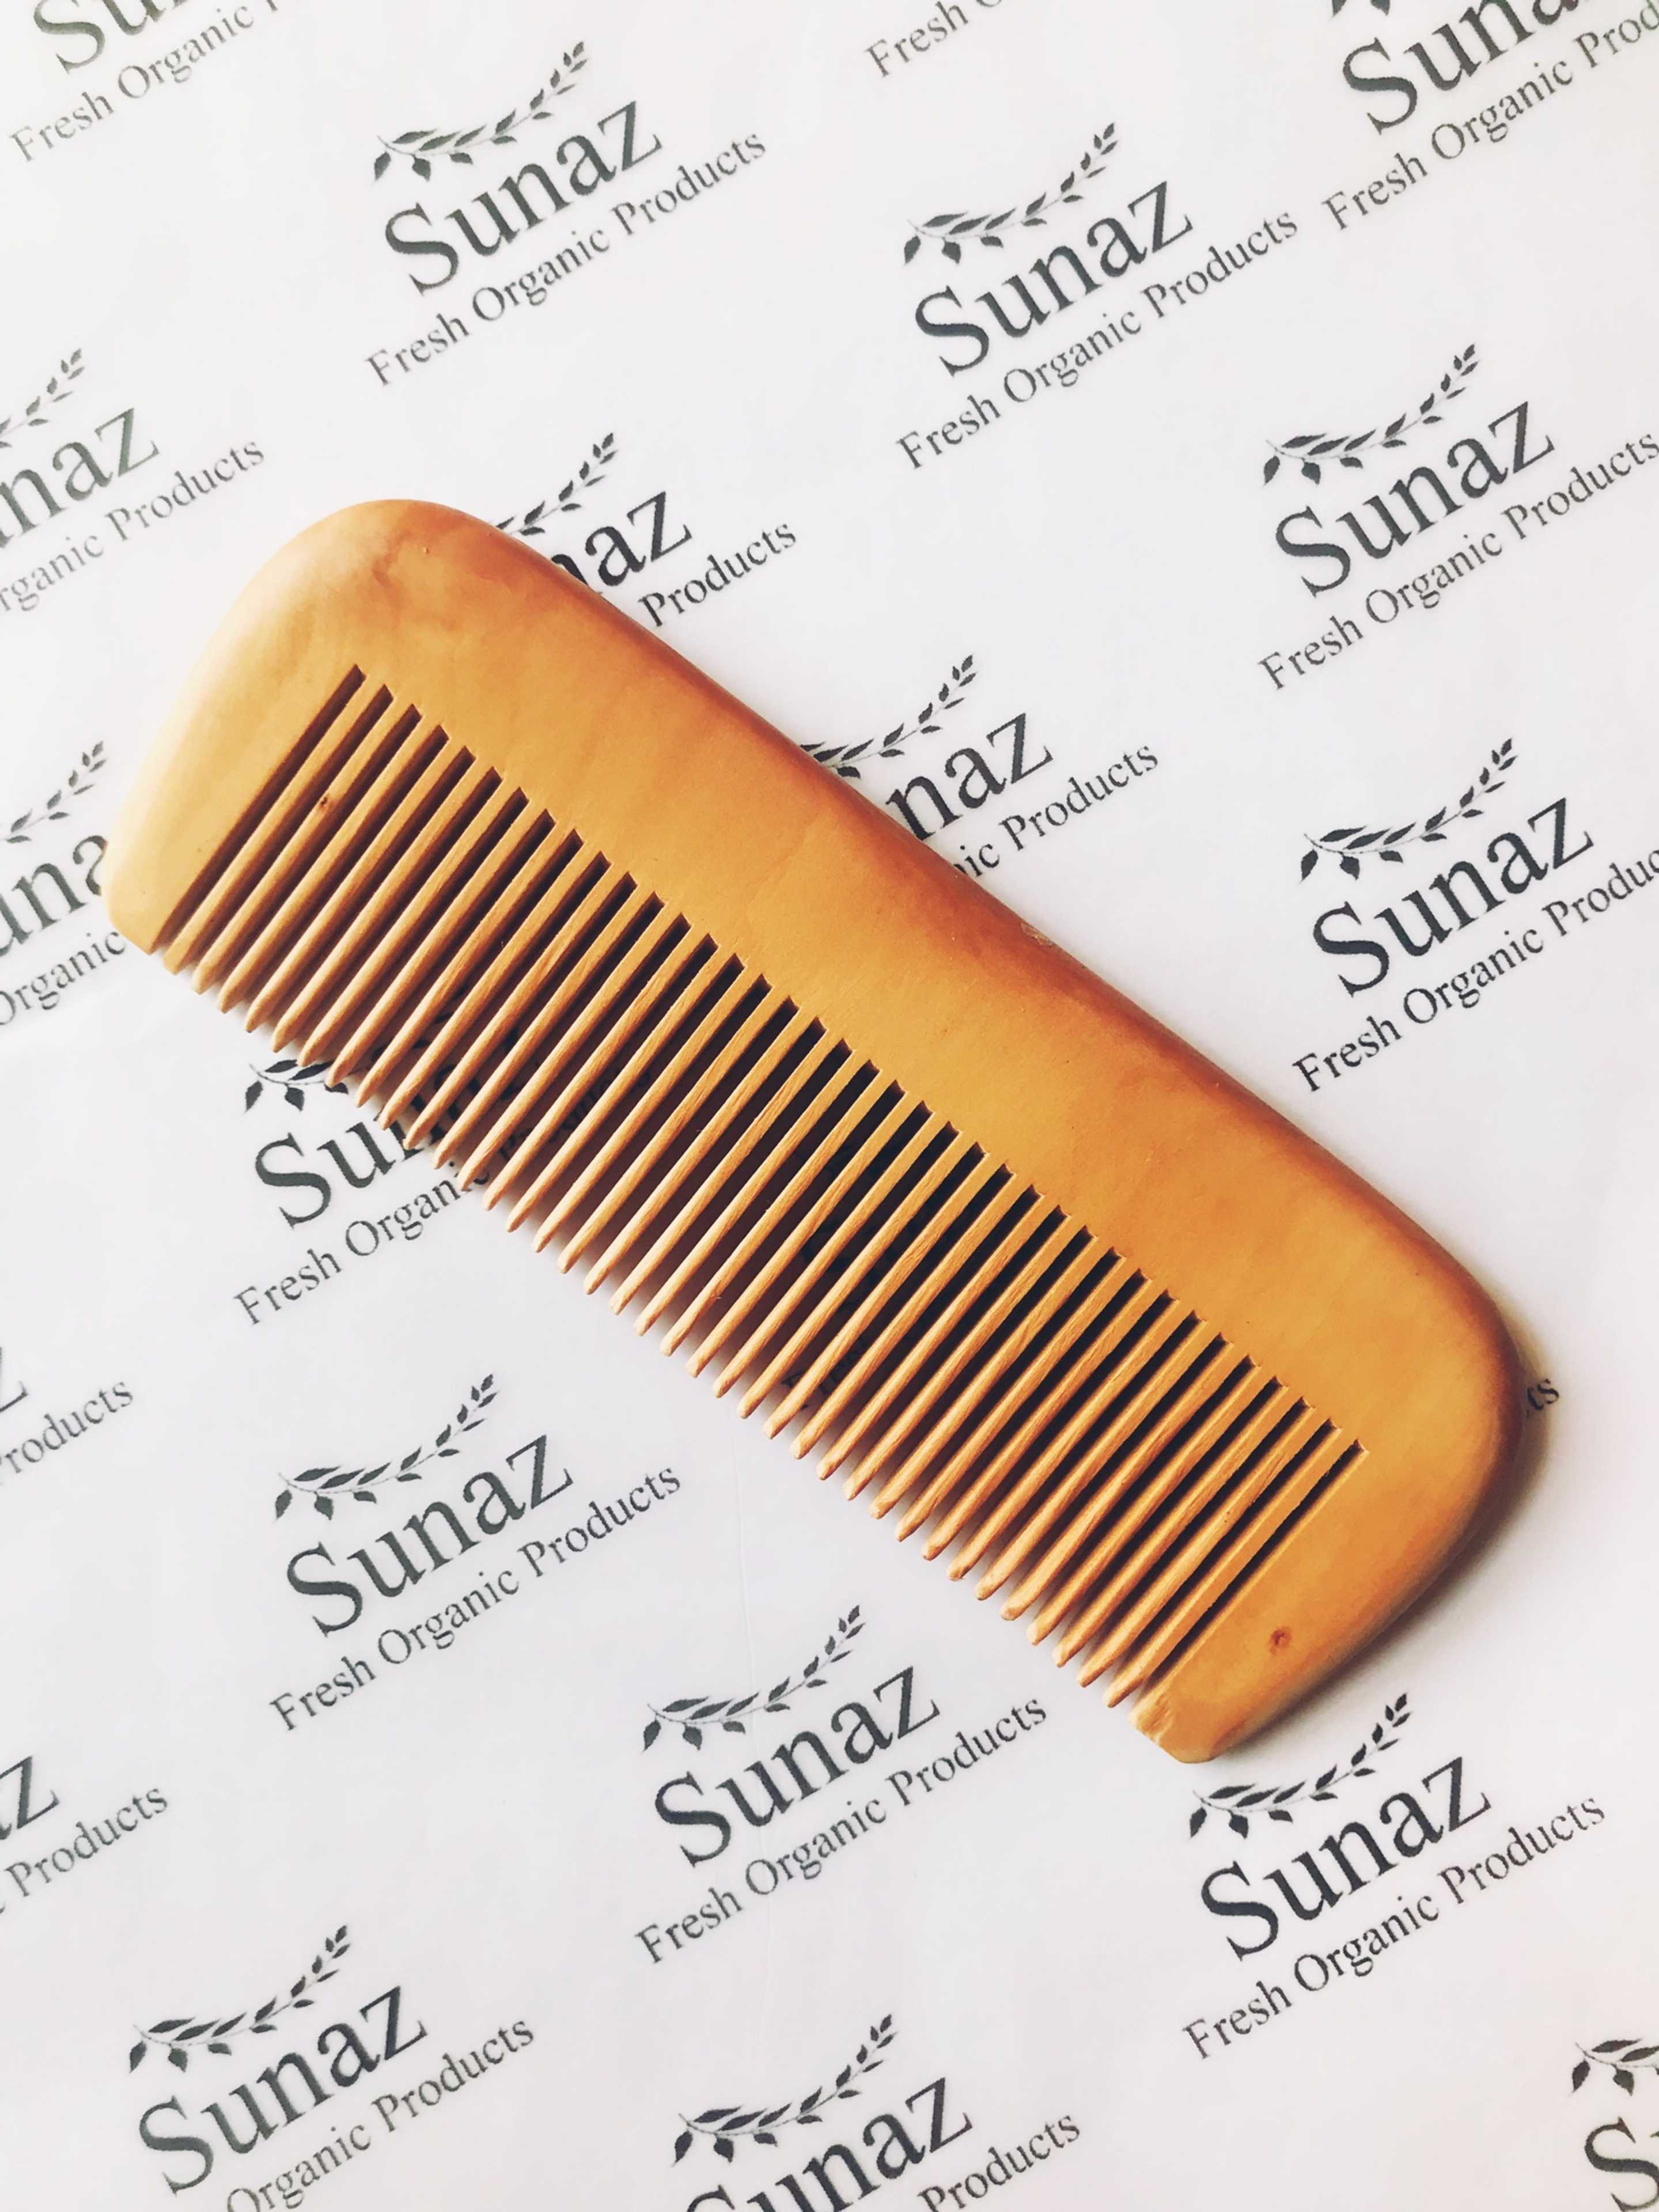 Sunaz wooden comb